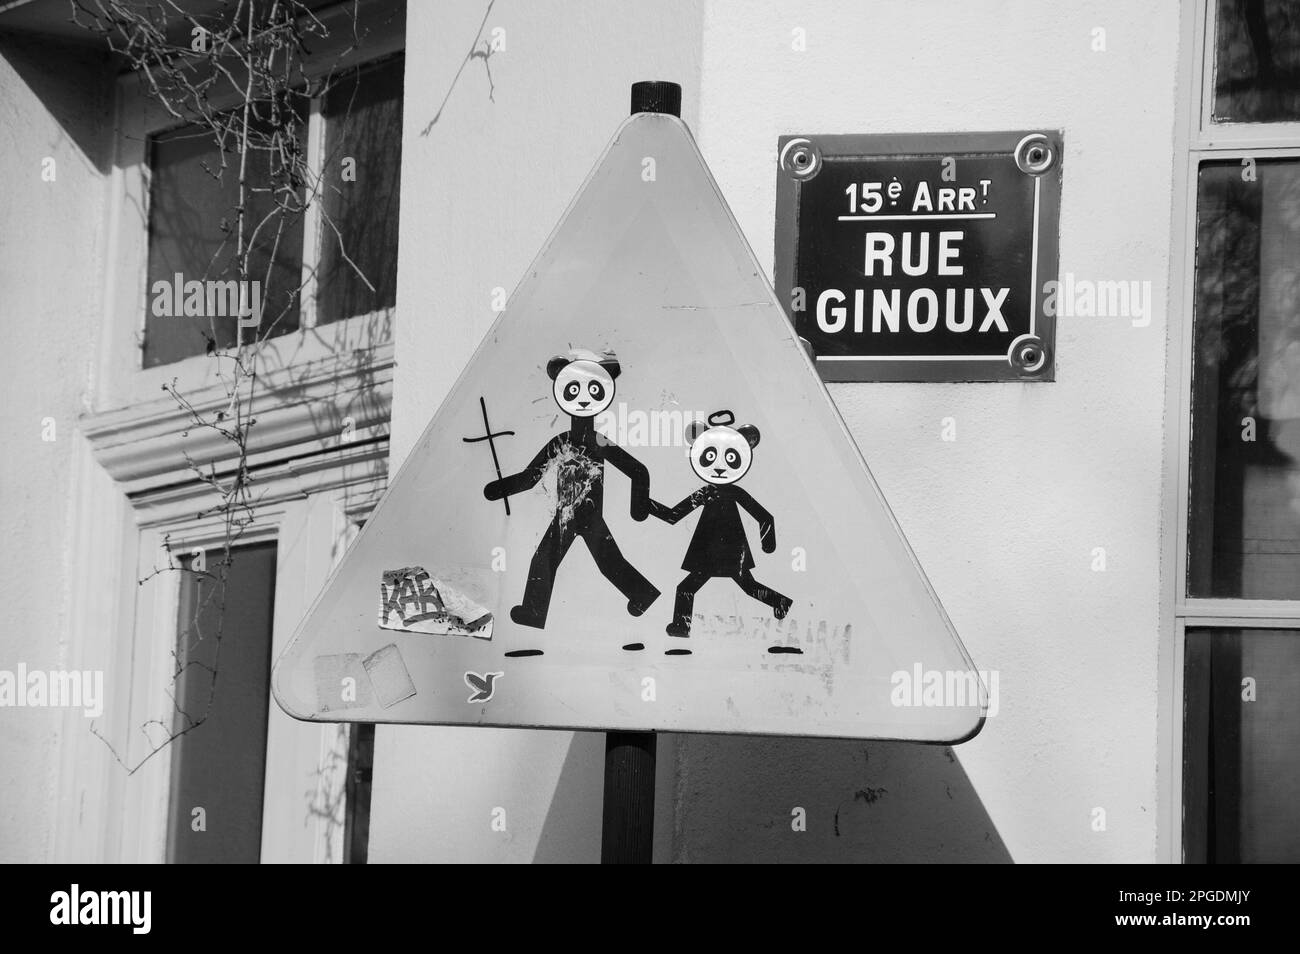 Paris, France - March 12, 2016: City life. Saint Panda bears crossing road. Traffic road sign Warning Children Crossing funny 'corrected'. Stock Photo